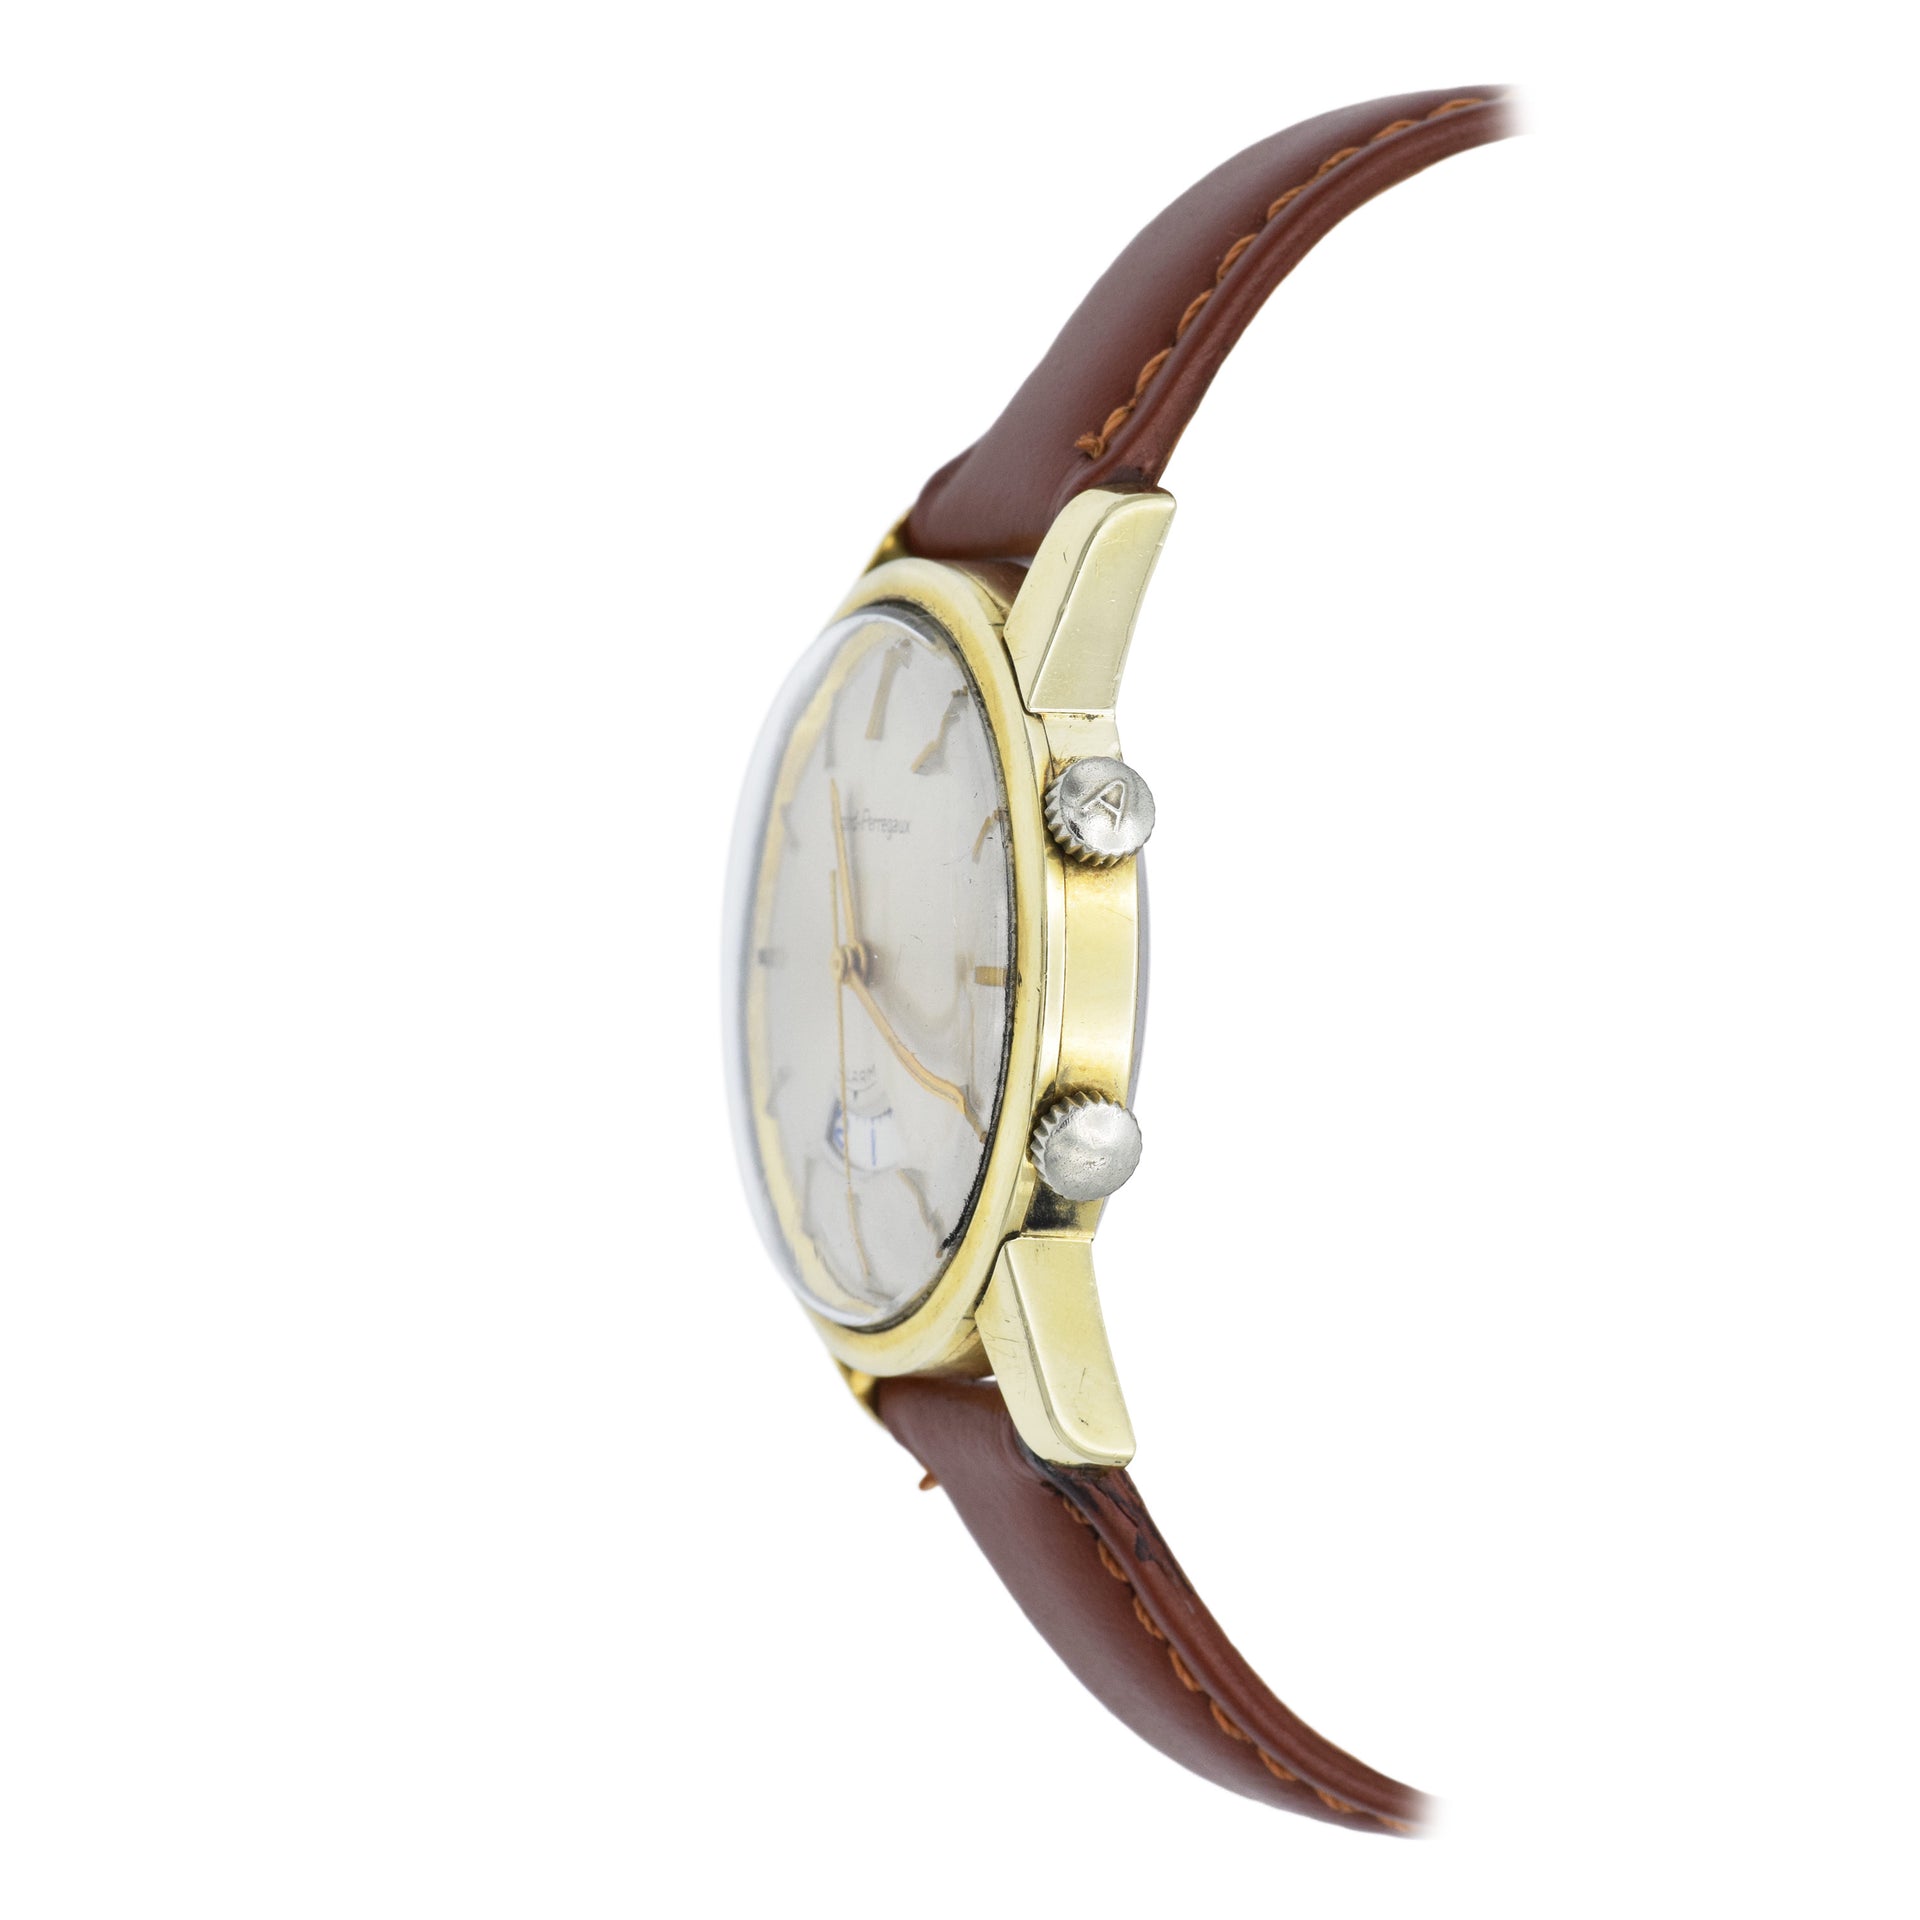 Vintage 1960s Girard-Perregaux Alarm Watch